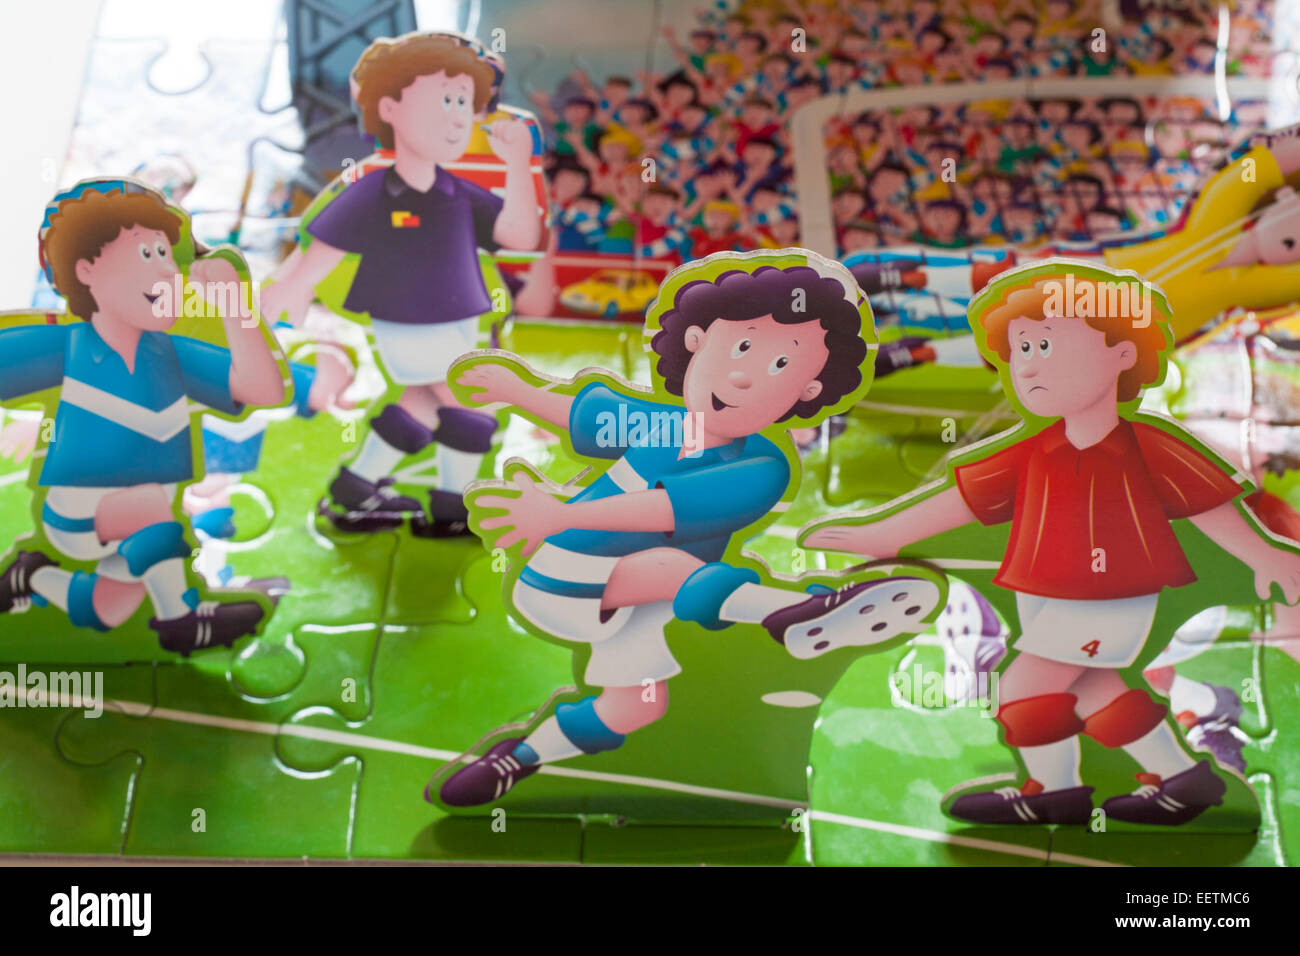 CHH Deportes Puzzle-Fútbol